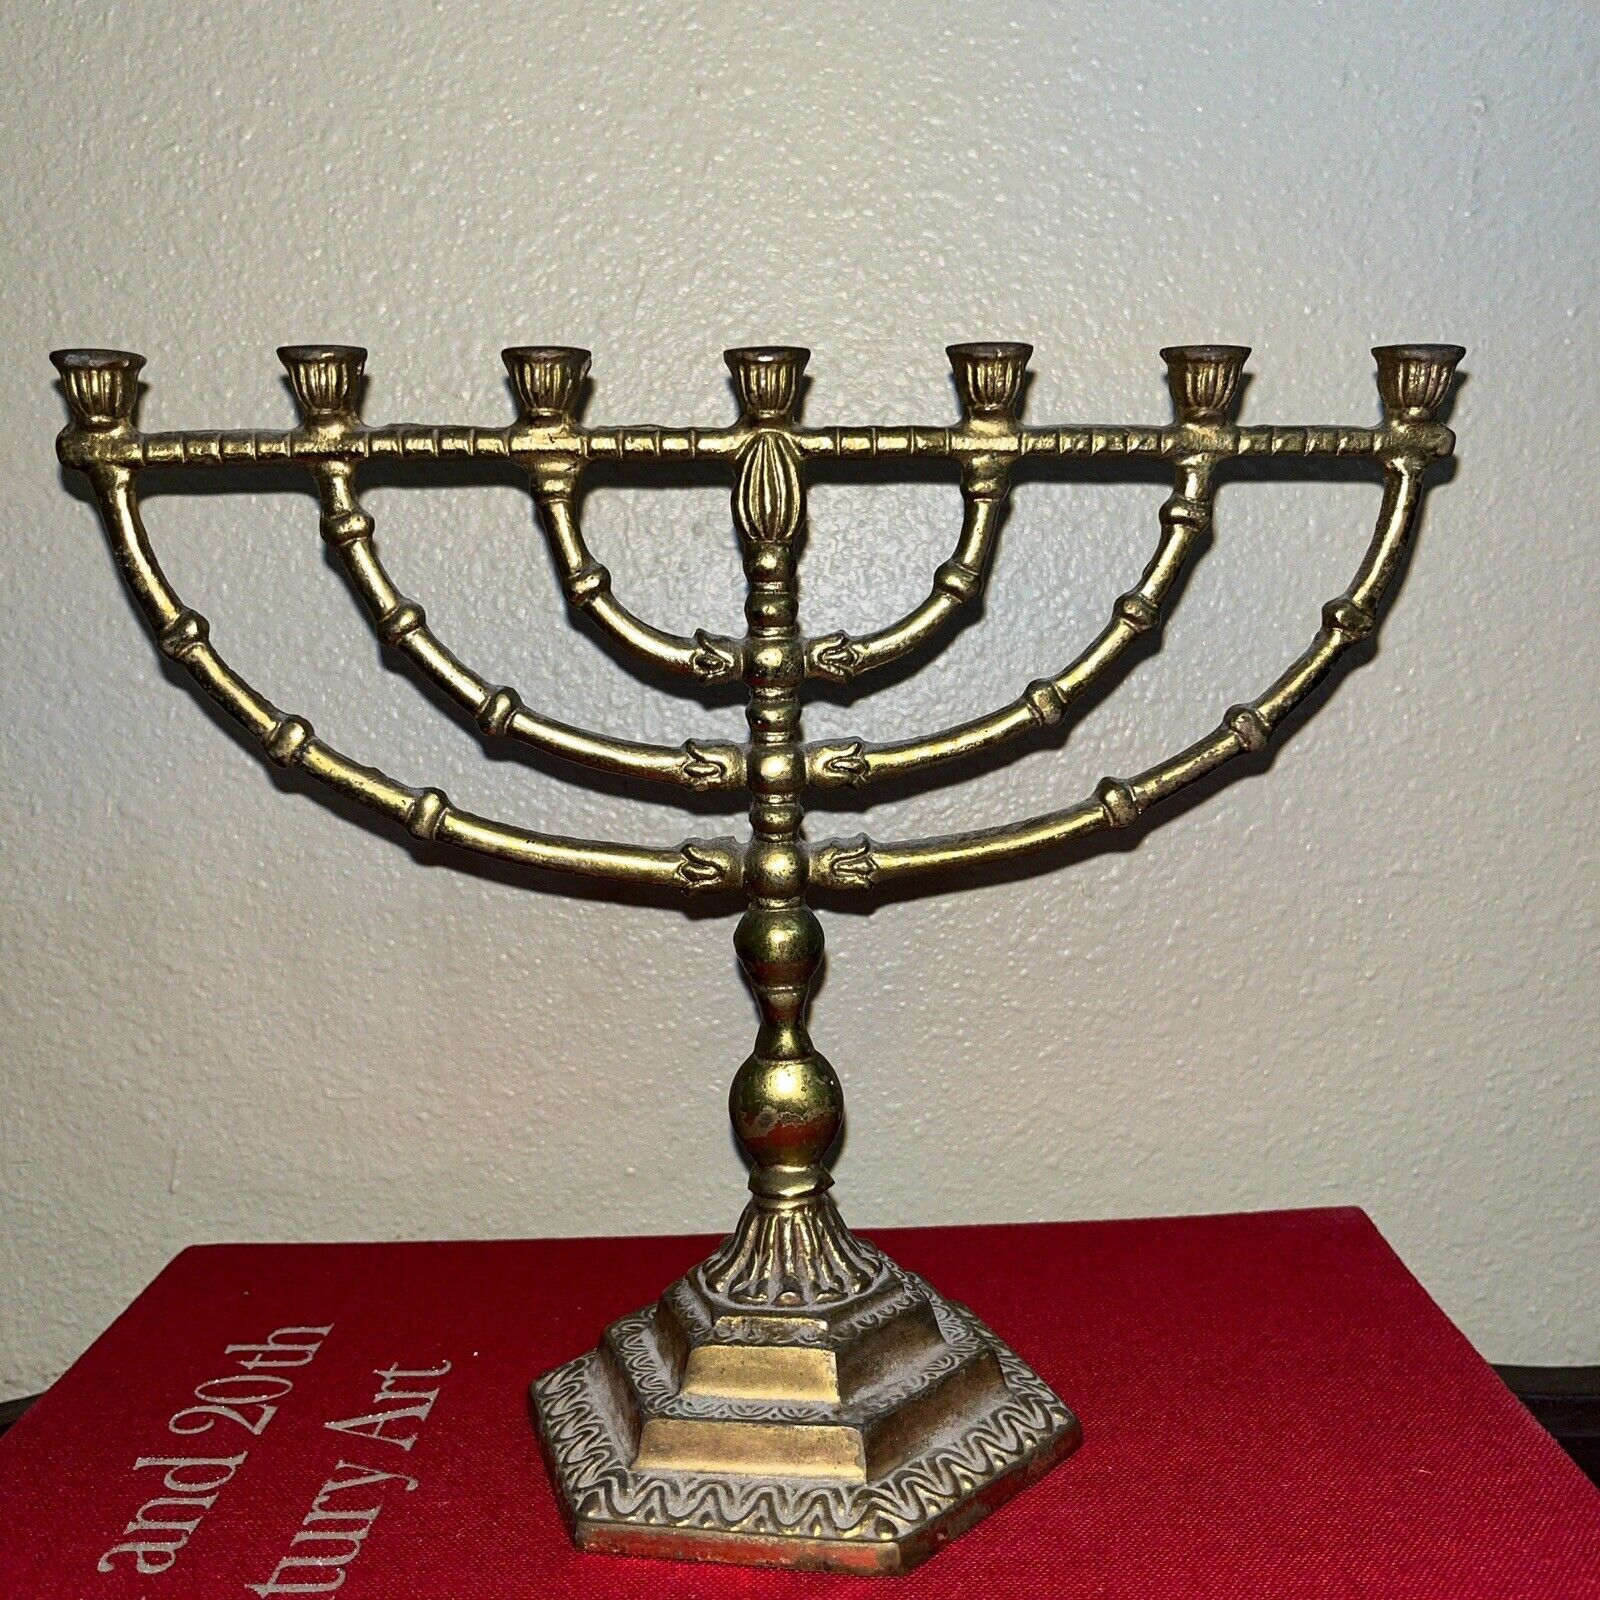 VTG Jewish Temple Menorah Brass 7 Branched Candelabra Candle Holder